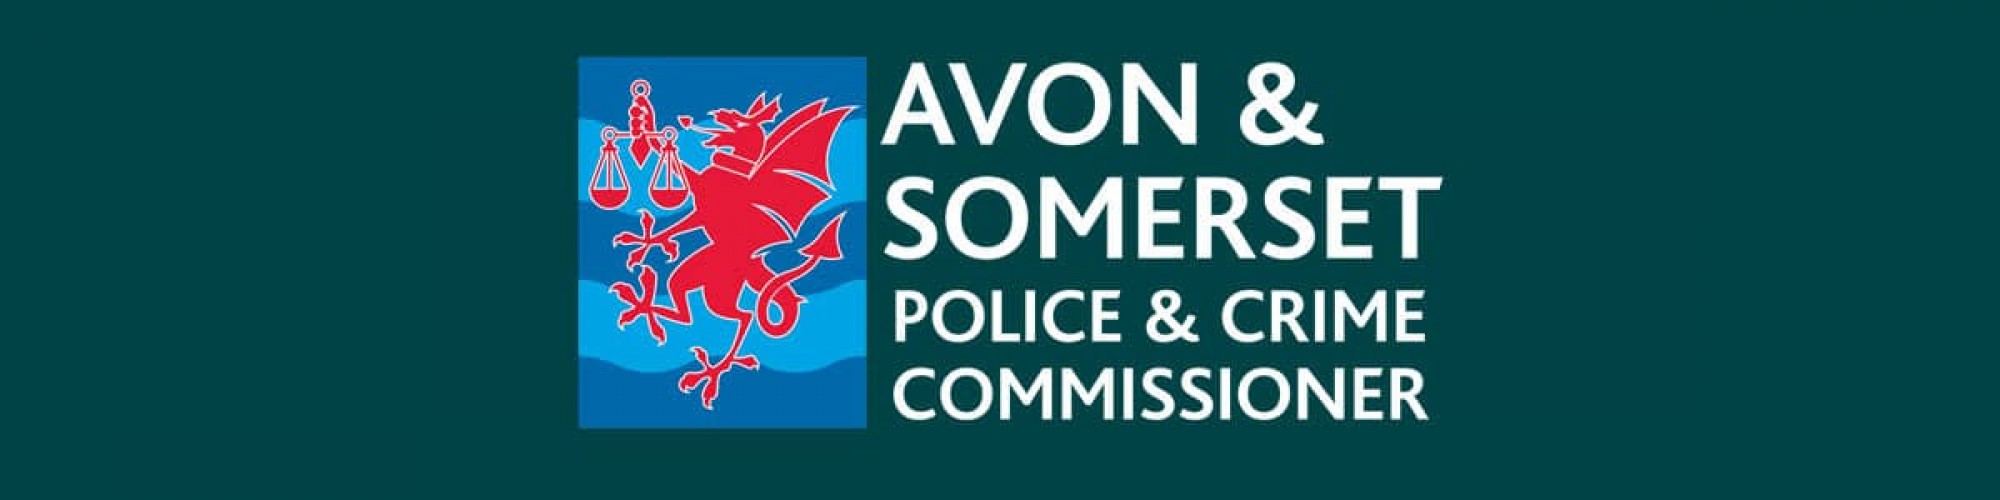 Avon & Somerset Police & Crime Commissioner